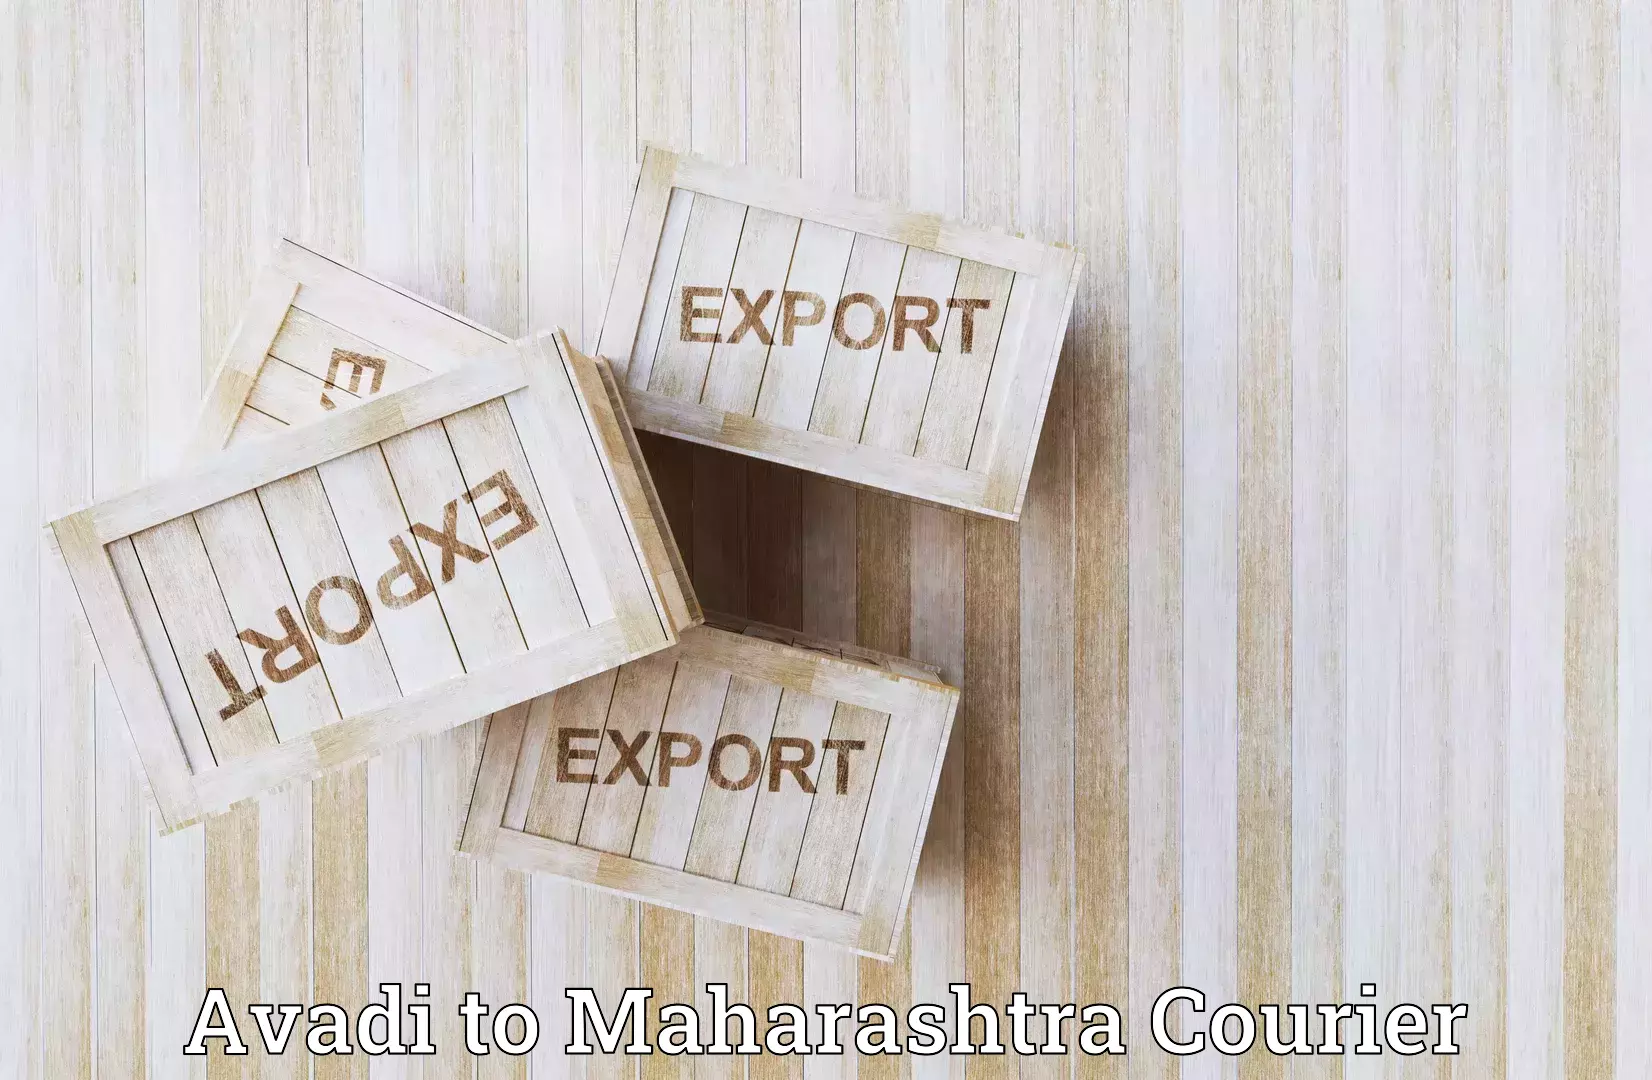 Lightweight parcel options Avadi to Maharashtra